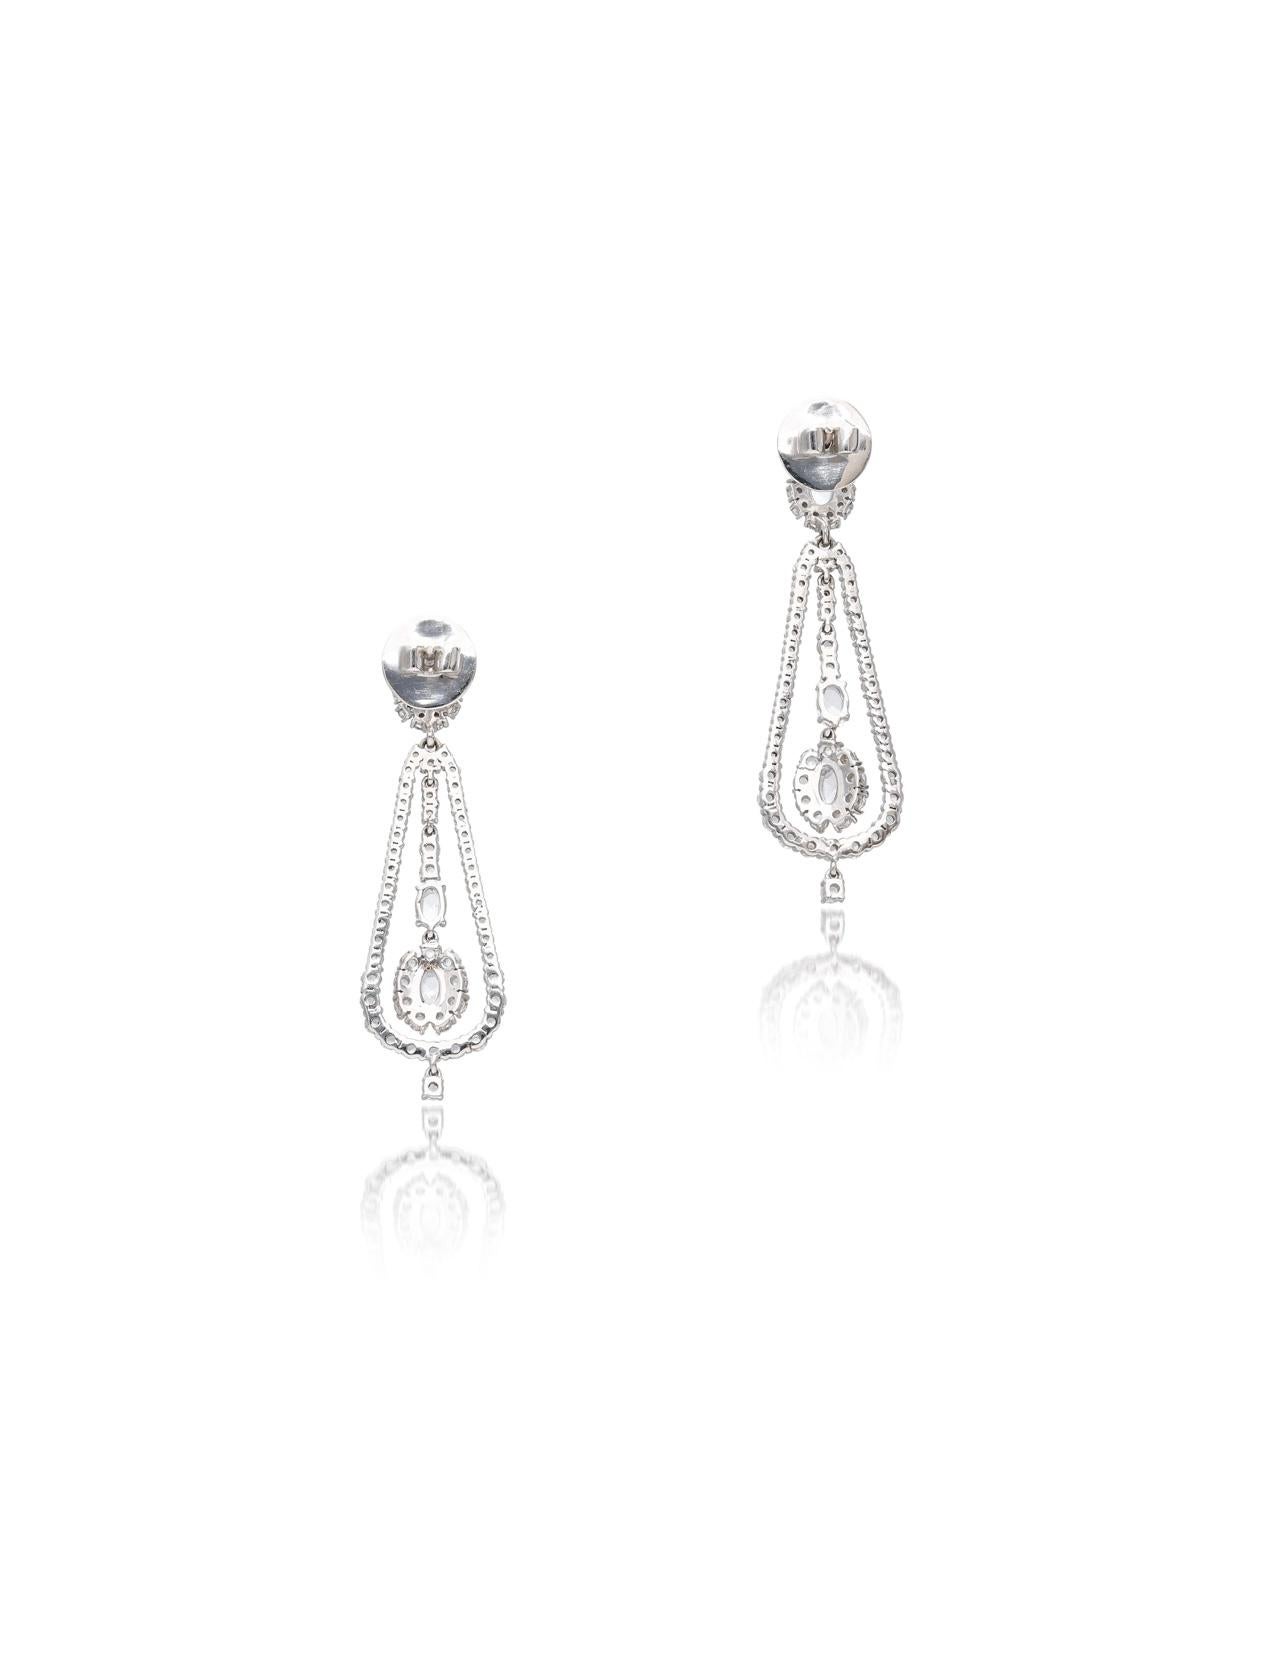 Contemporary Rose Cut Diamond Chandelier Earrings In 18K White Gold.  For Sale